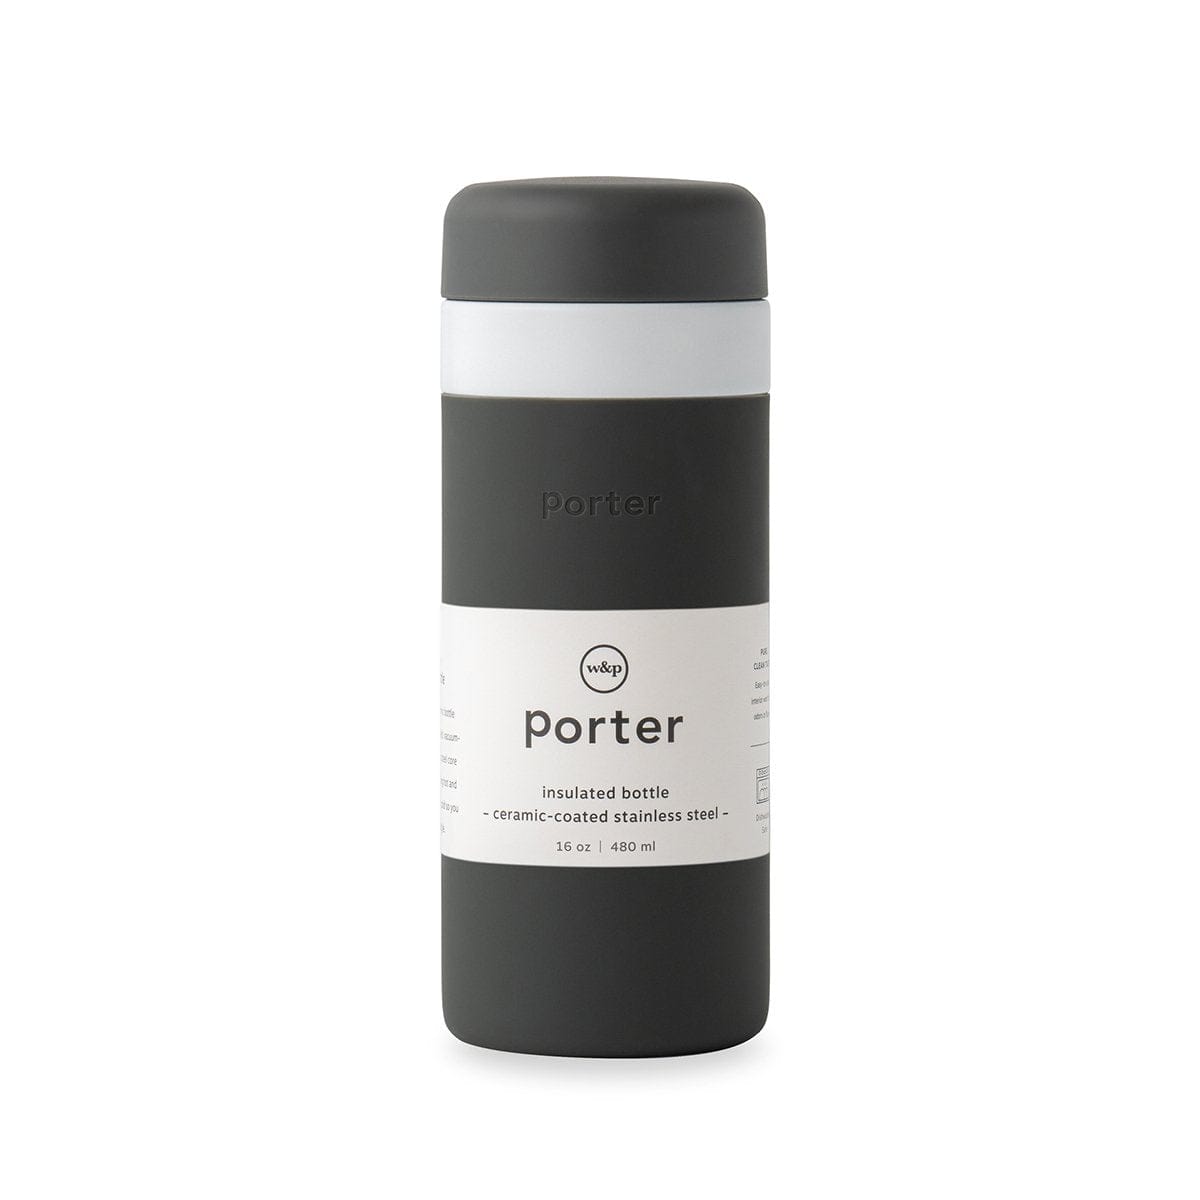 W&P Porter Insulated Ceramic Stainless Steel Bottle 475ml W&P Porter Insulated Ceramic Stainless Steel Bottle 475ml 